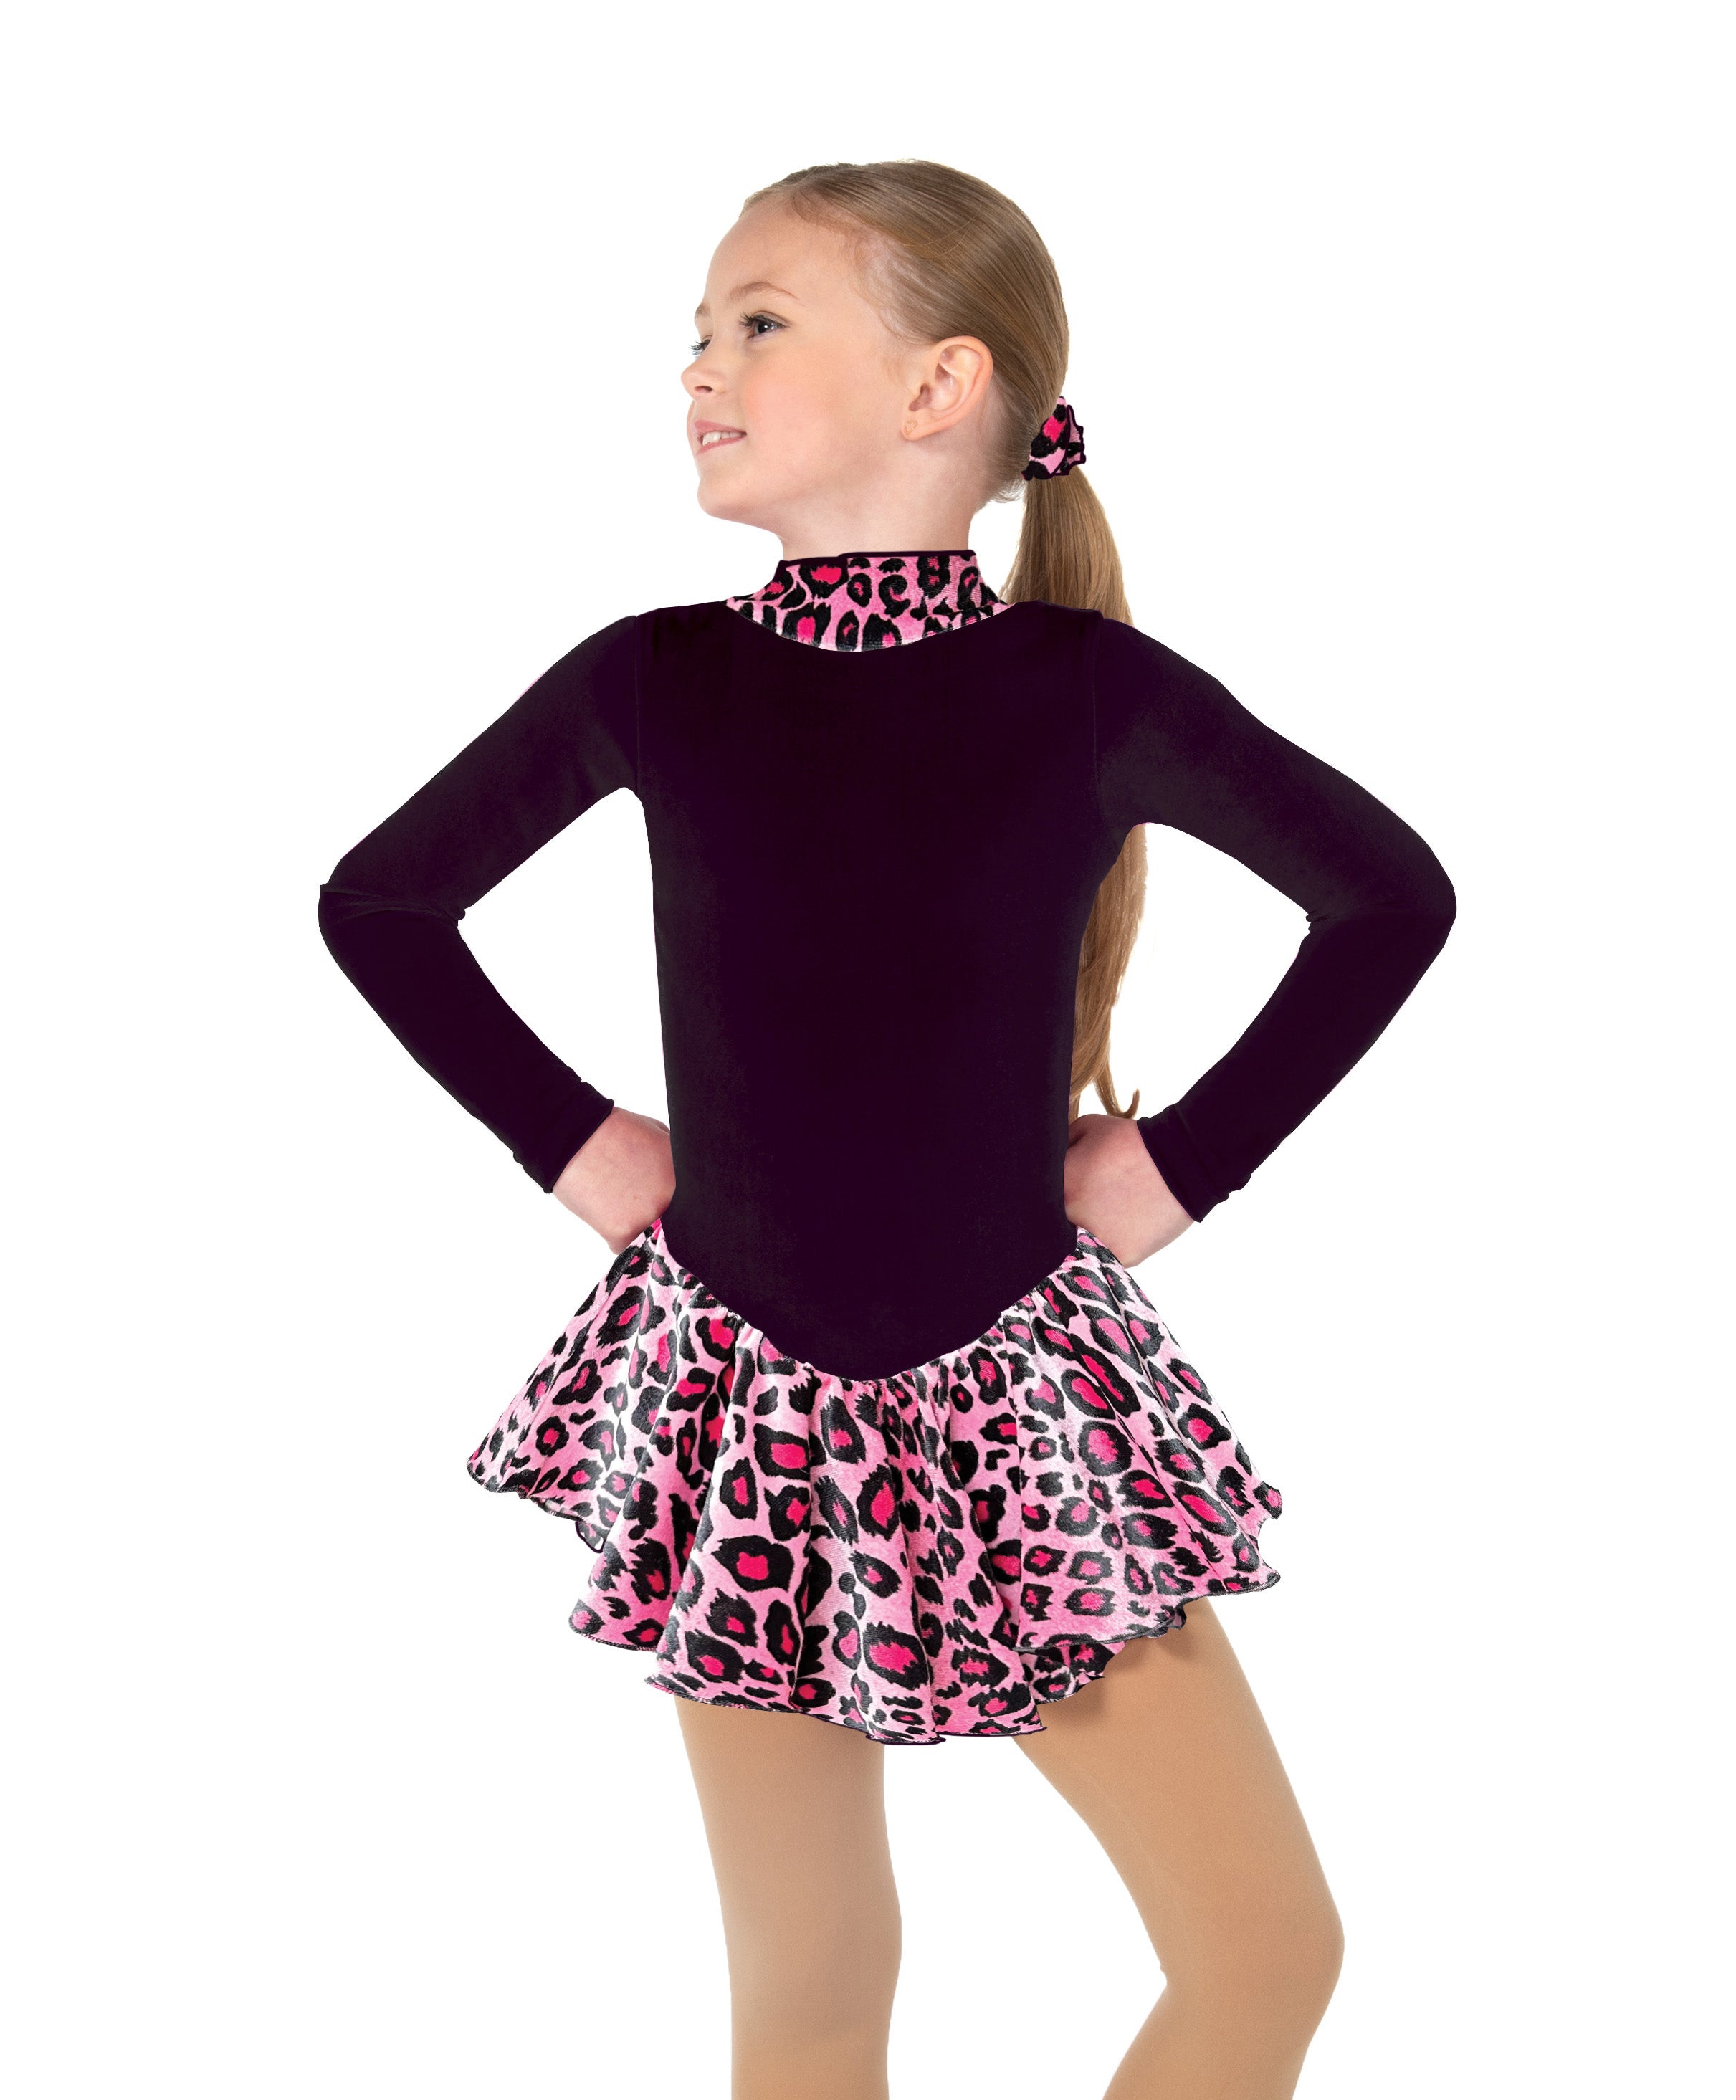 693 Fleece Catwalk Skating Dress in Black Pink by Jerry's